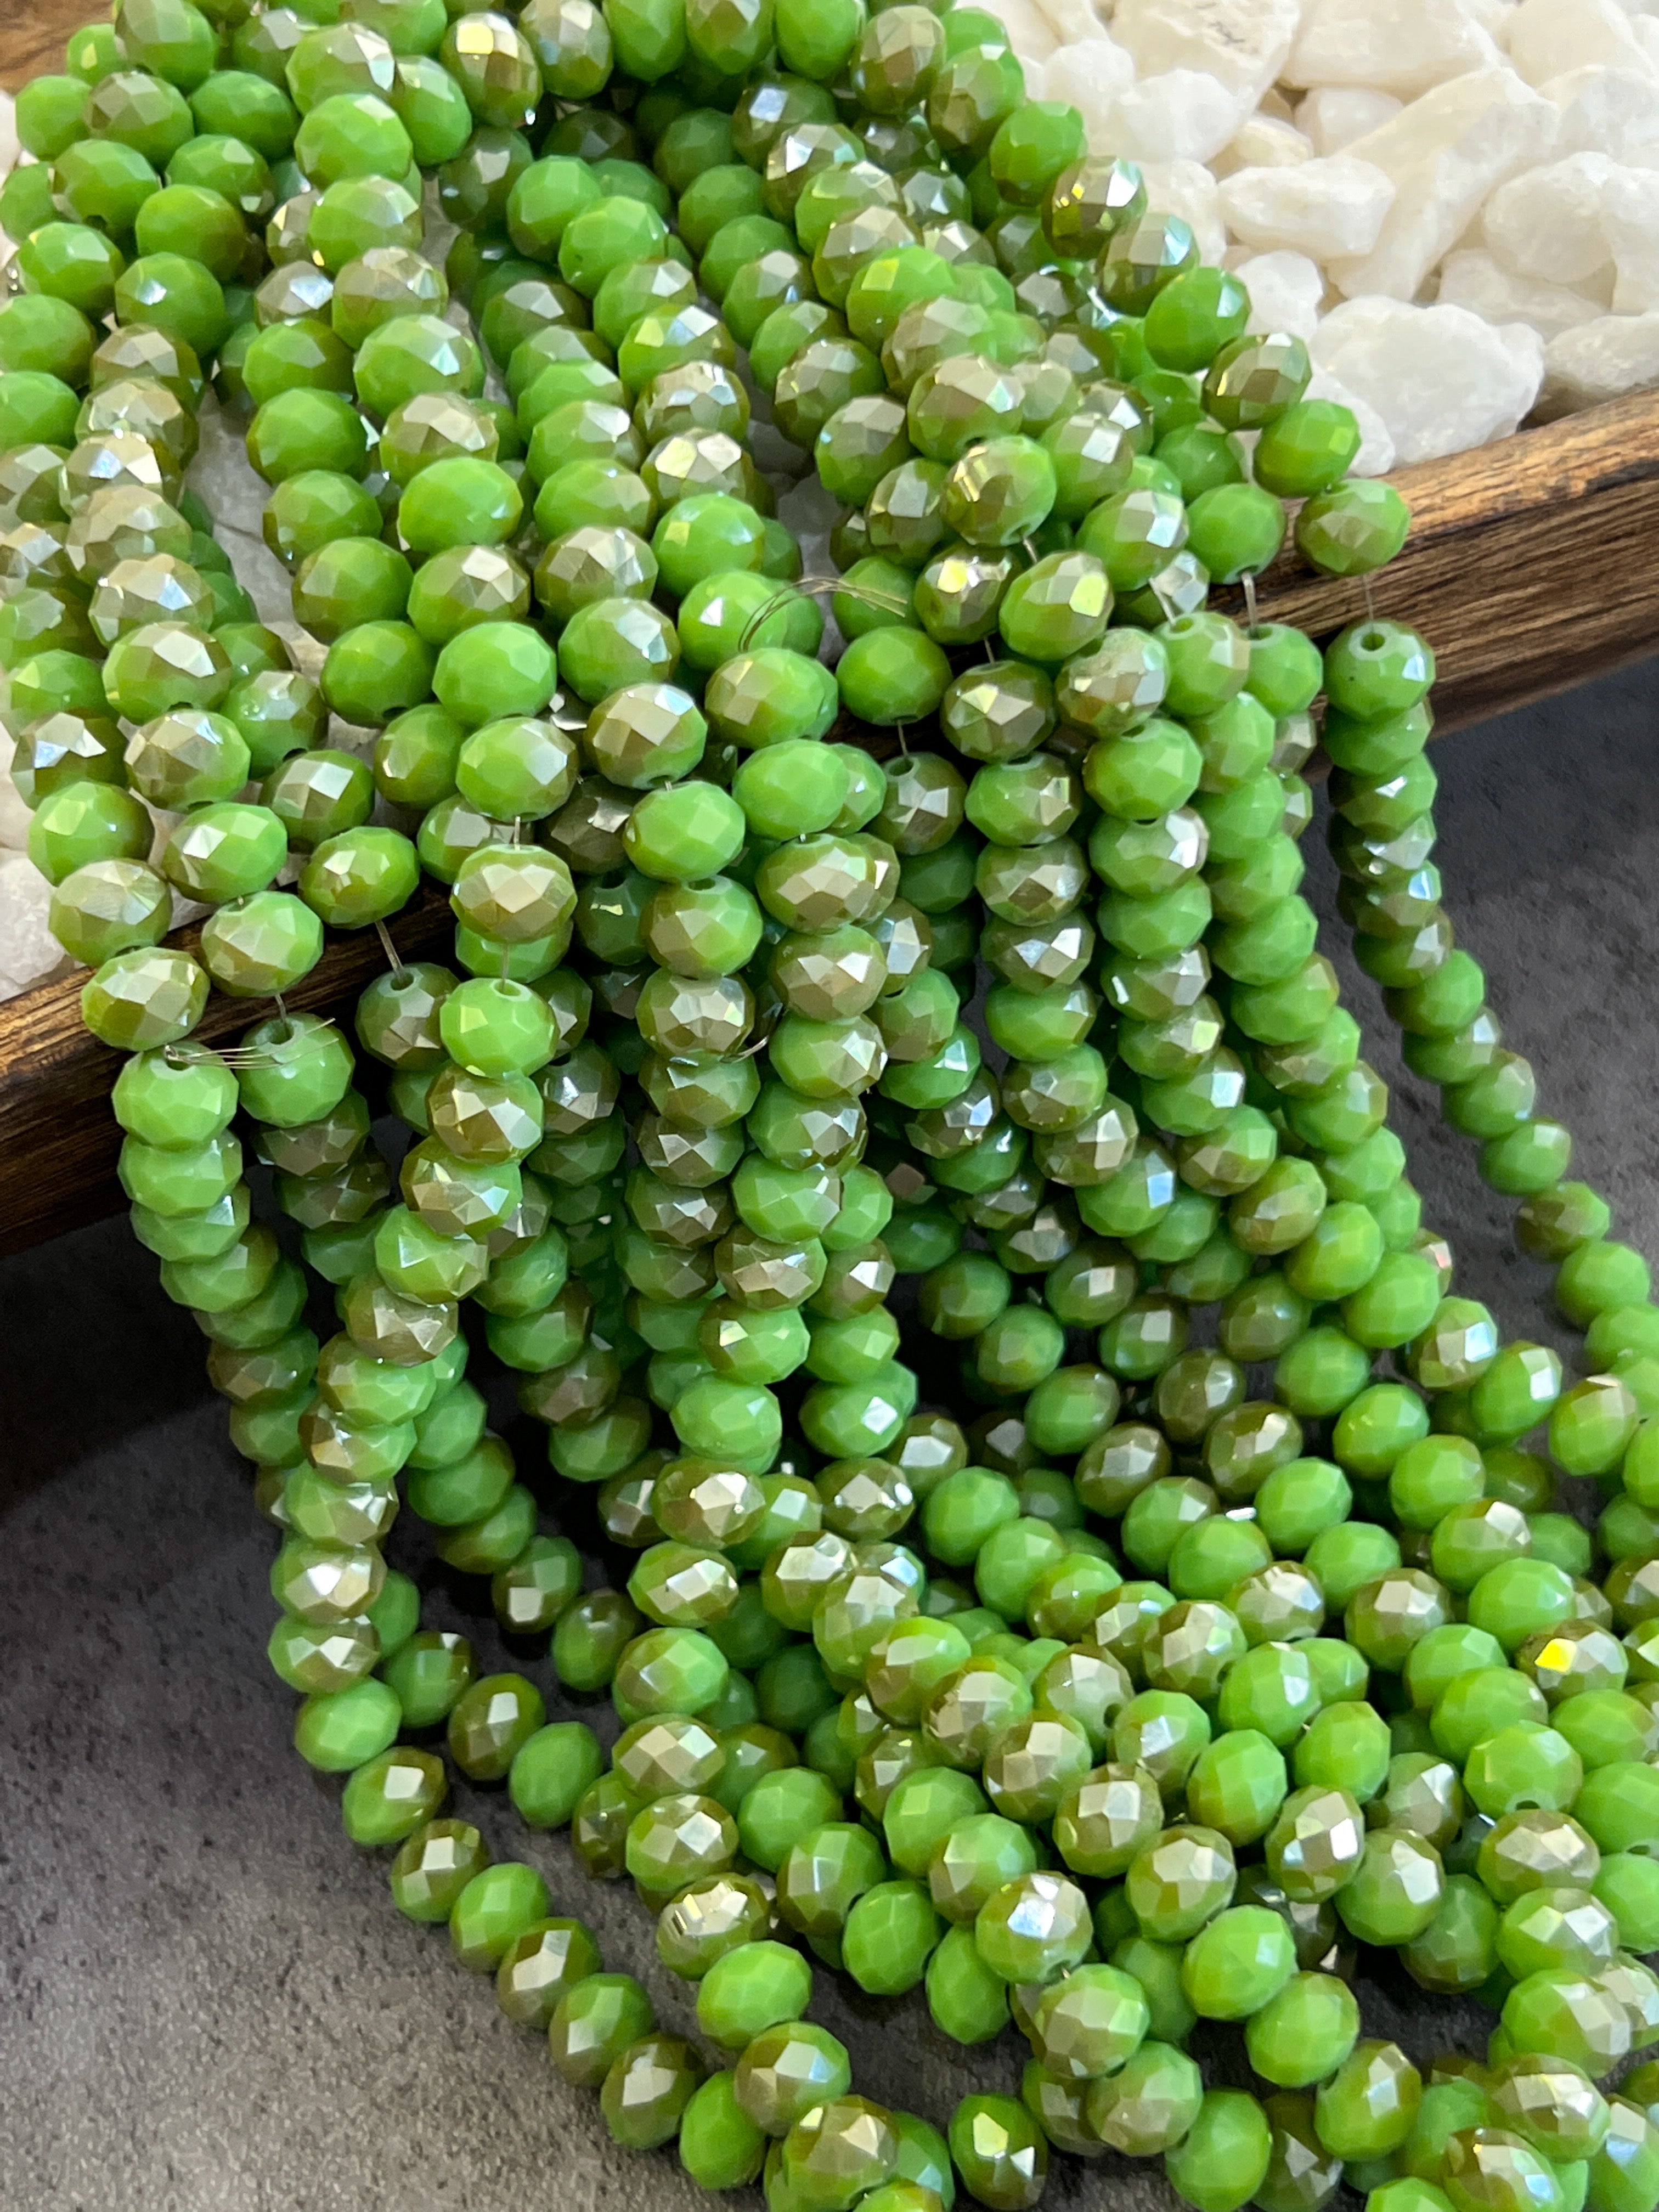 Emerald Dark Evergreen Green 8x6mm Chinese Crystal Rondelle Beads Q2  Strands